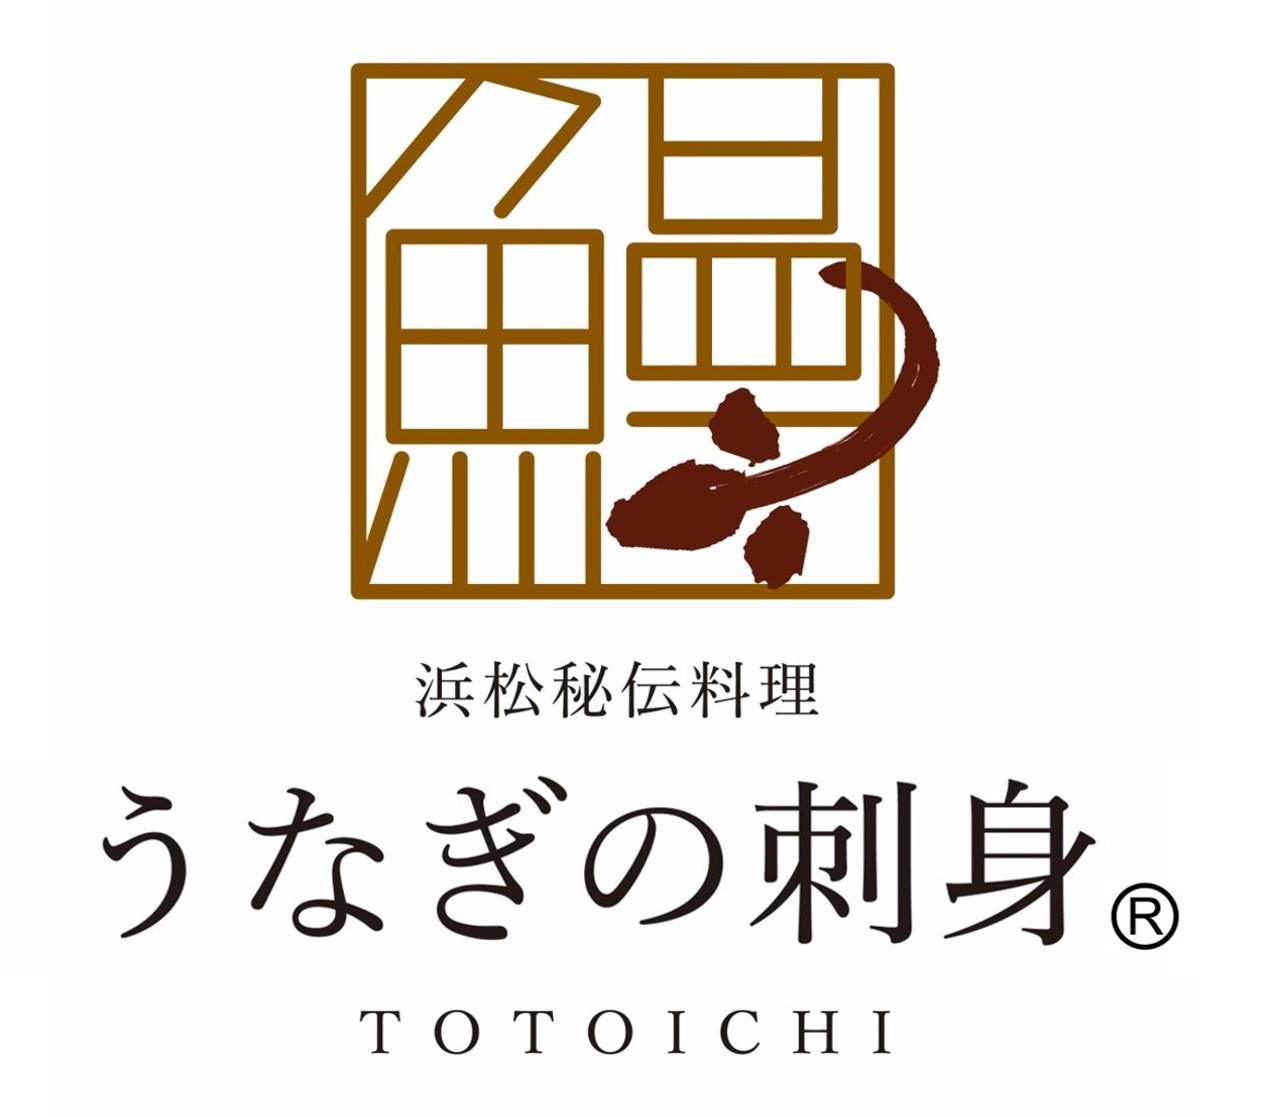 TOTOICHI Co., Ltd.